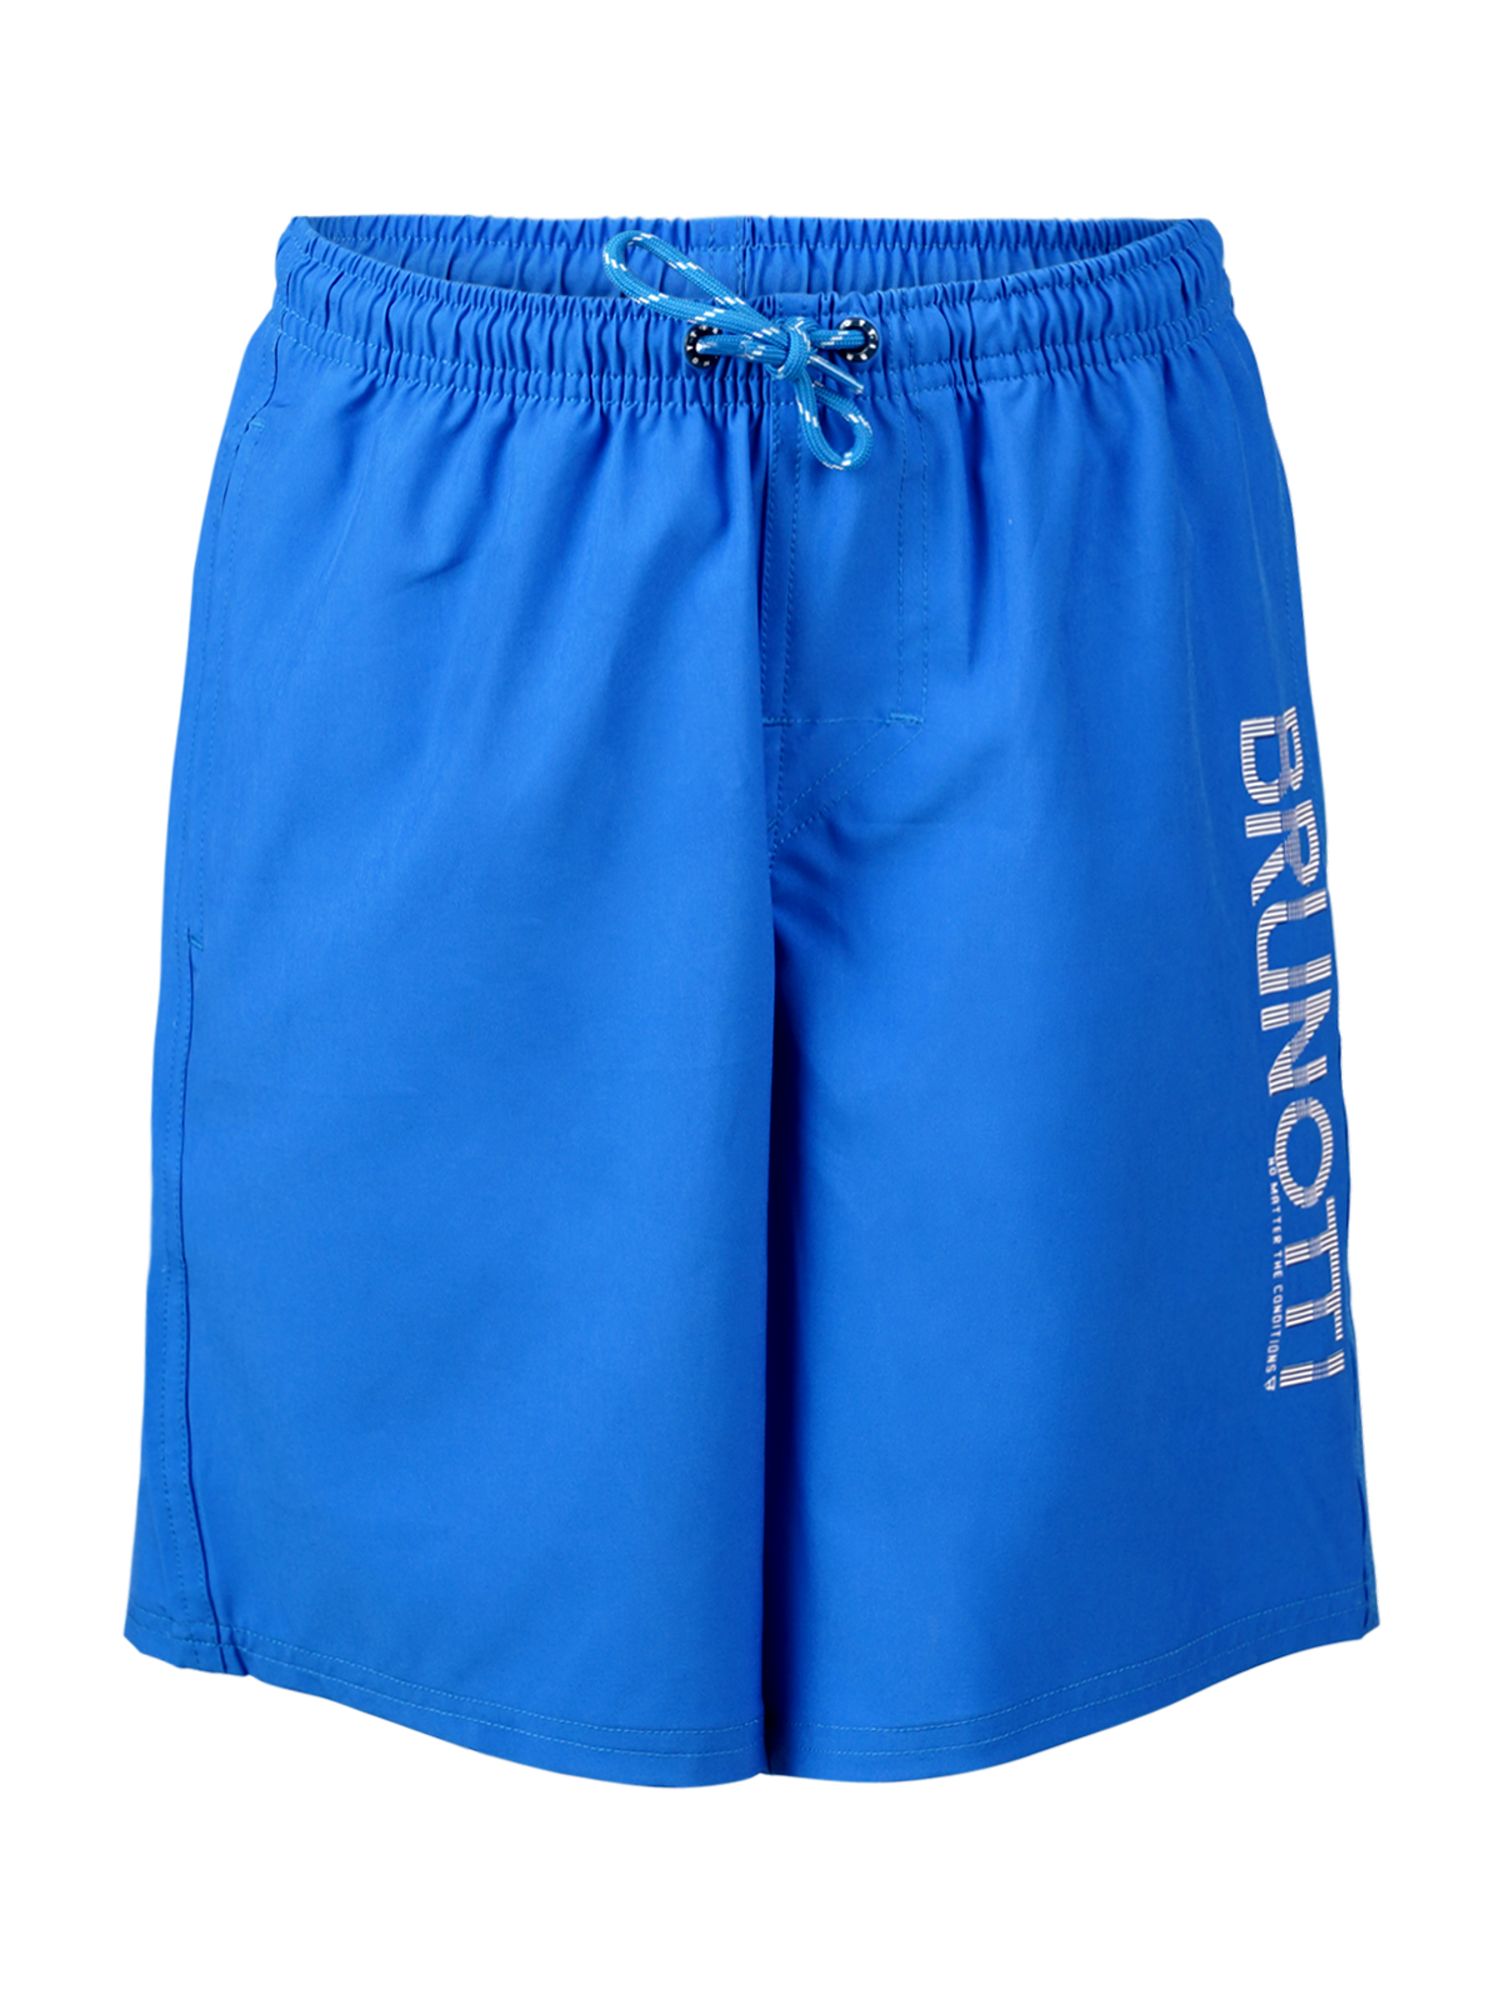 Brunotti lestery boys swim shorts -